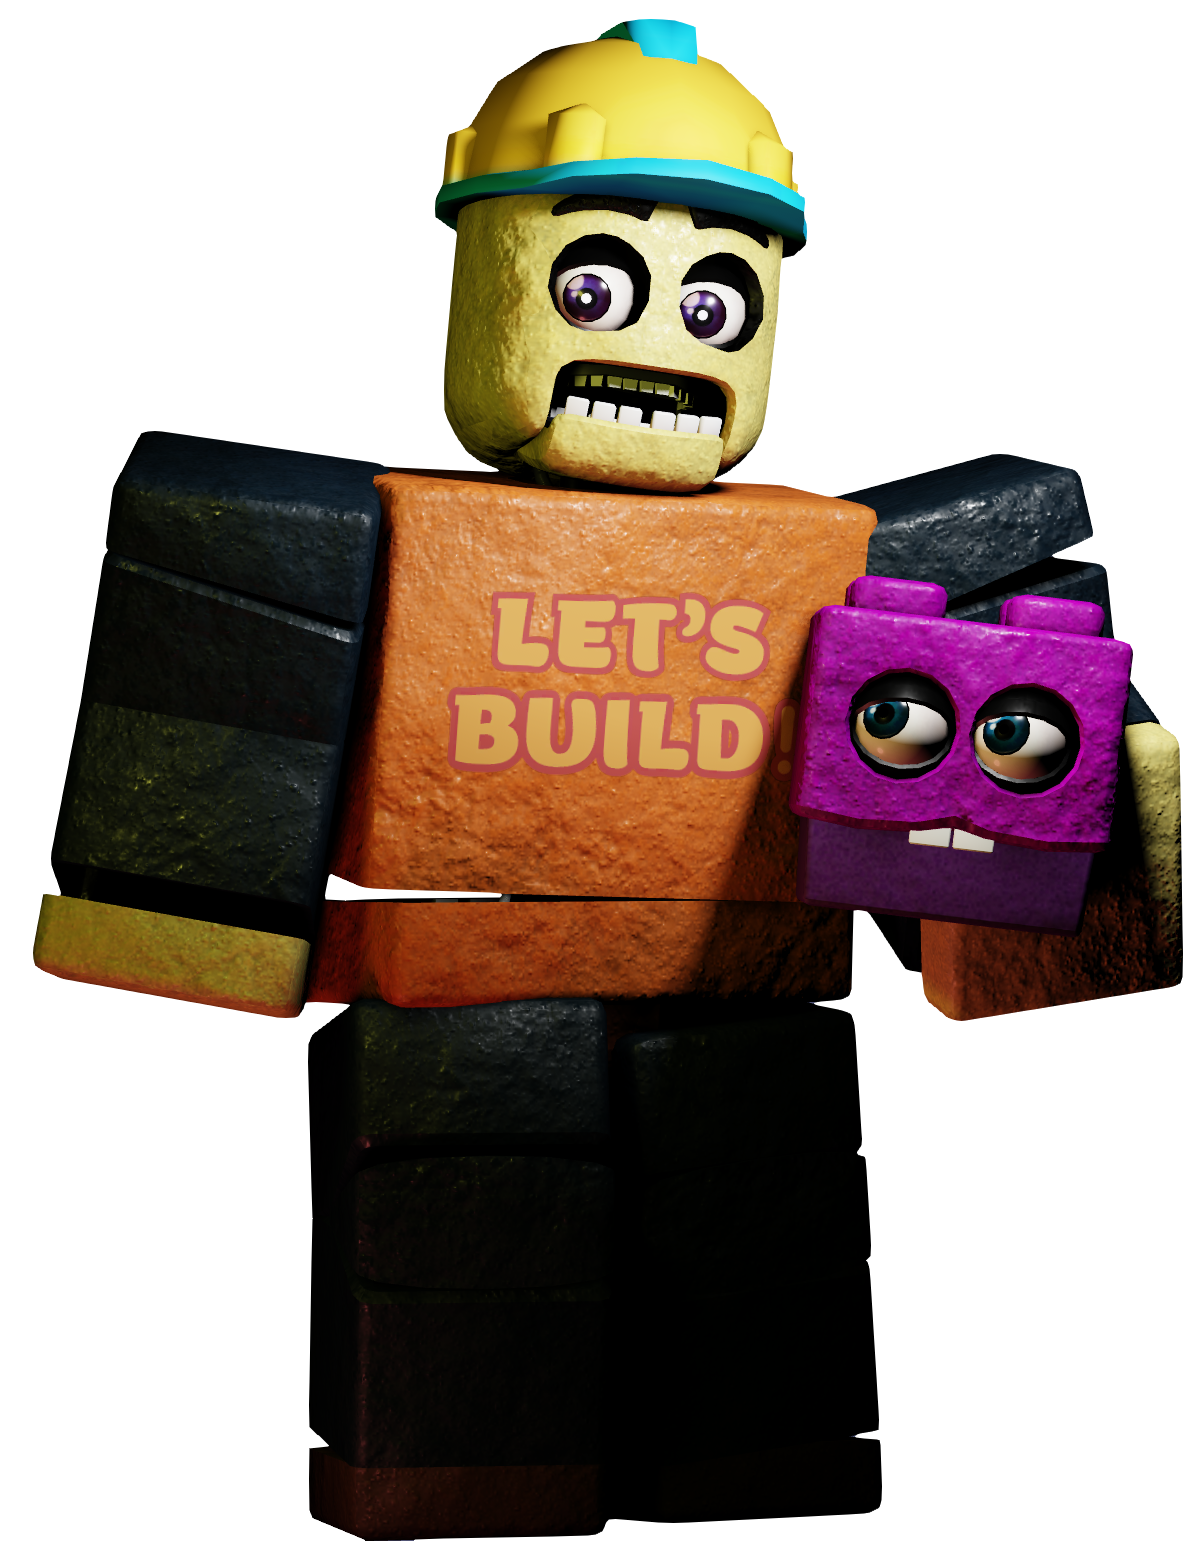 Builderman vs Admin 